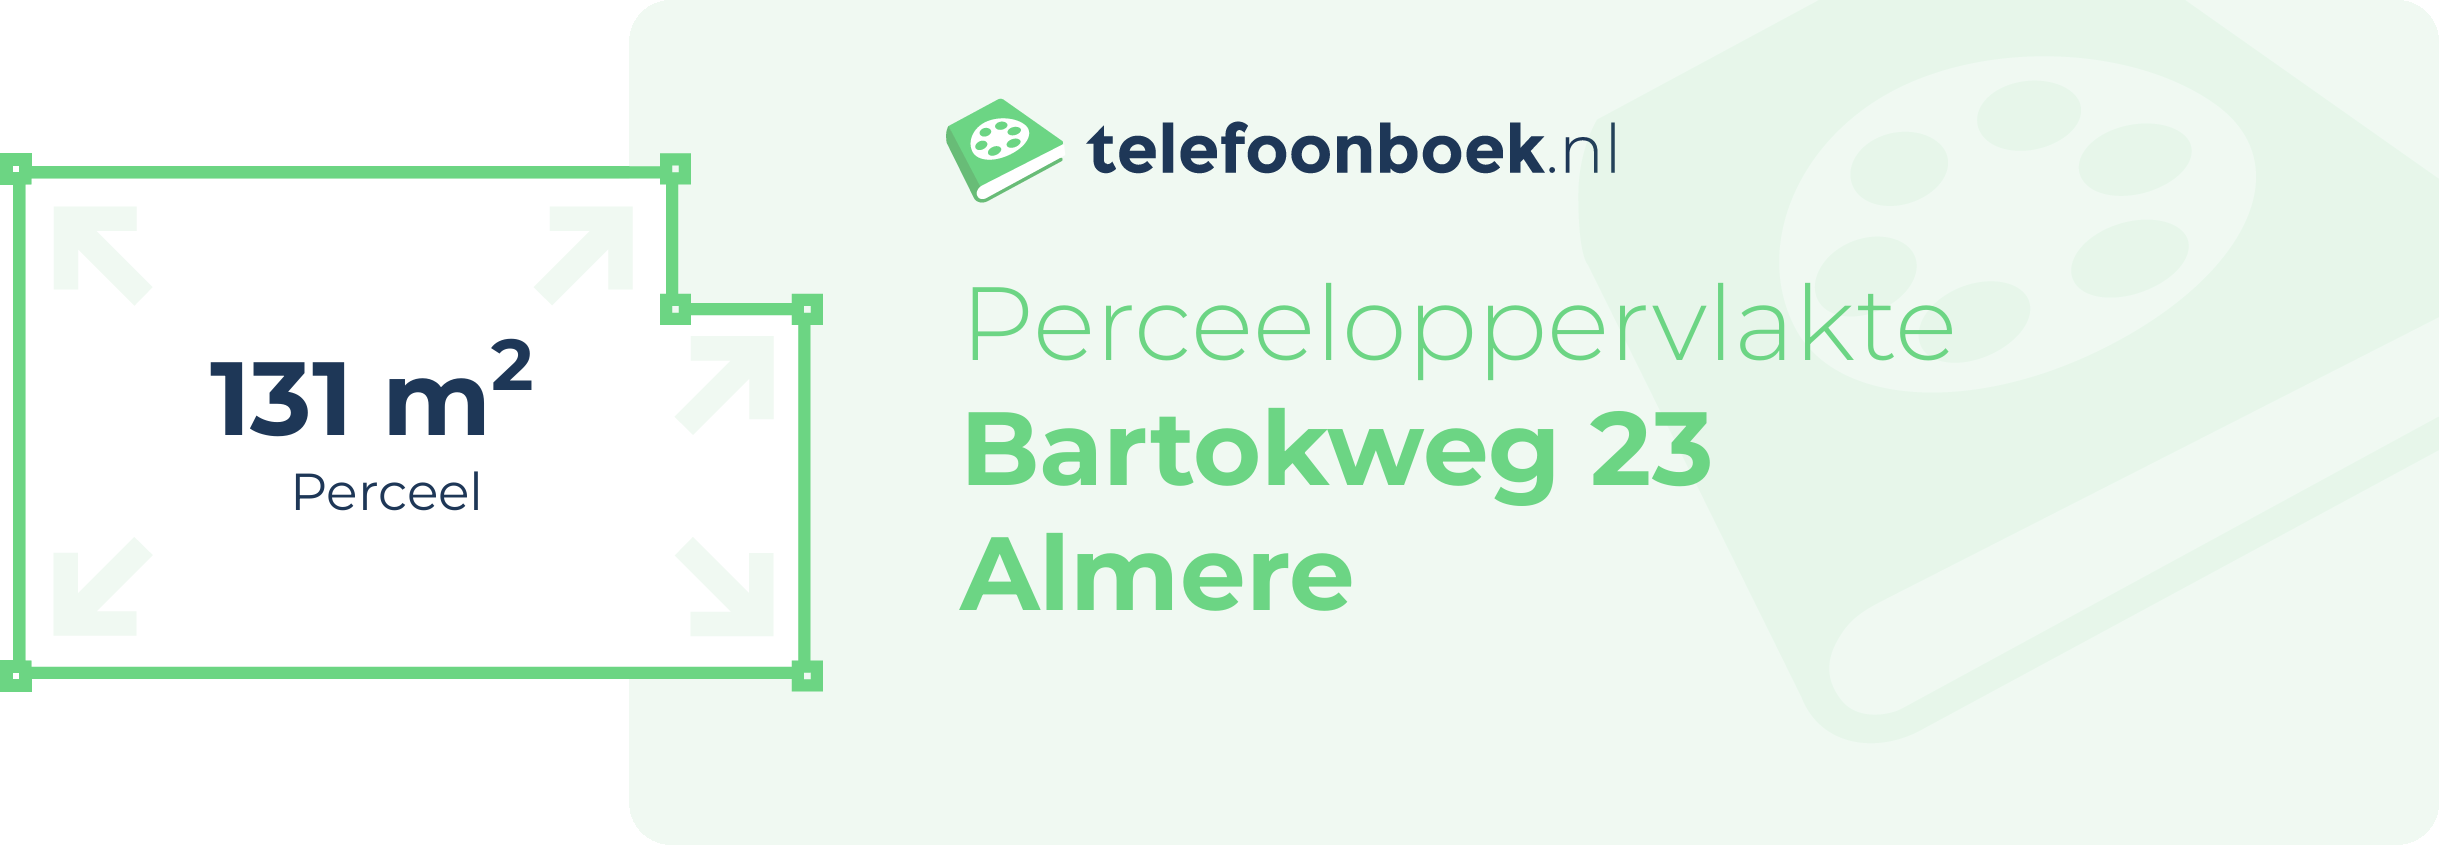 Perceeloppervlakte Bartokweg 23 Almere